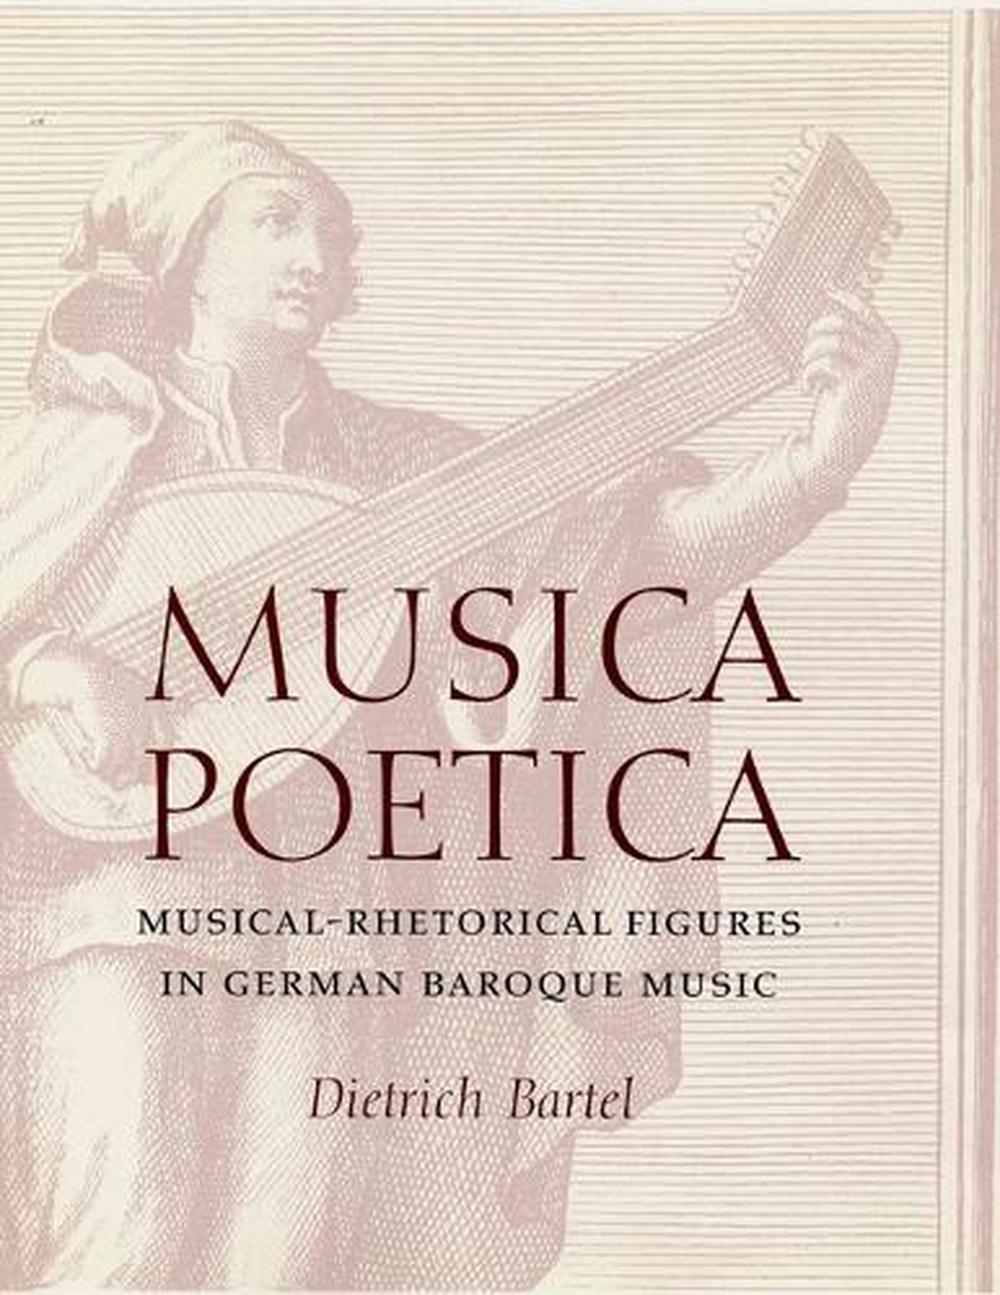 Musica Poetica MusicalRhetorical Figures in German Baroque Music by Dietrich Bartel, Hardcover